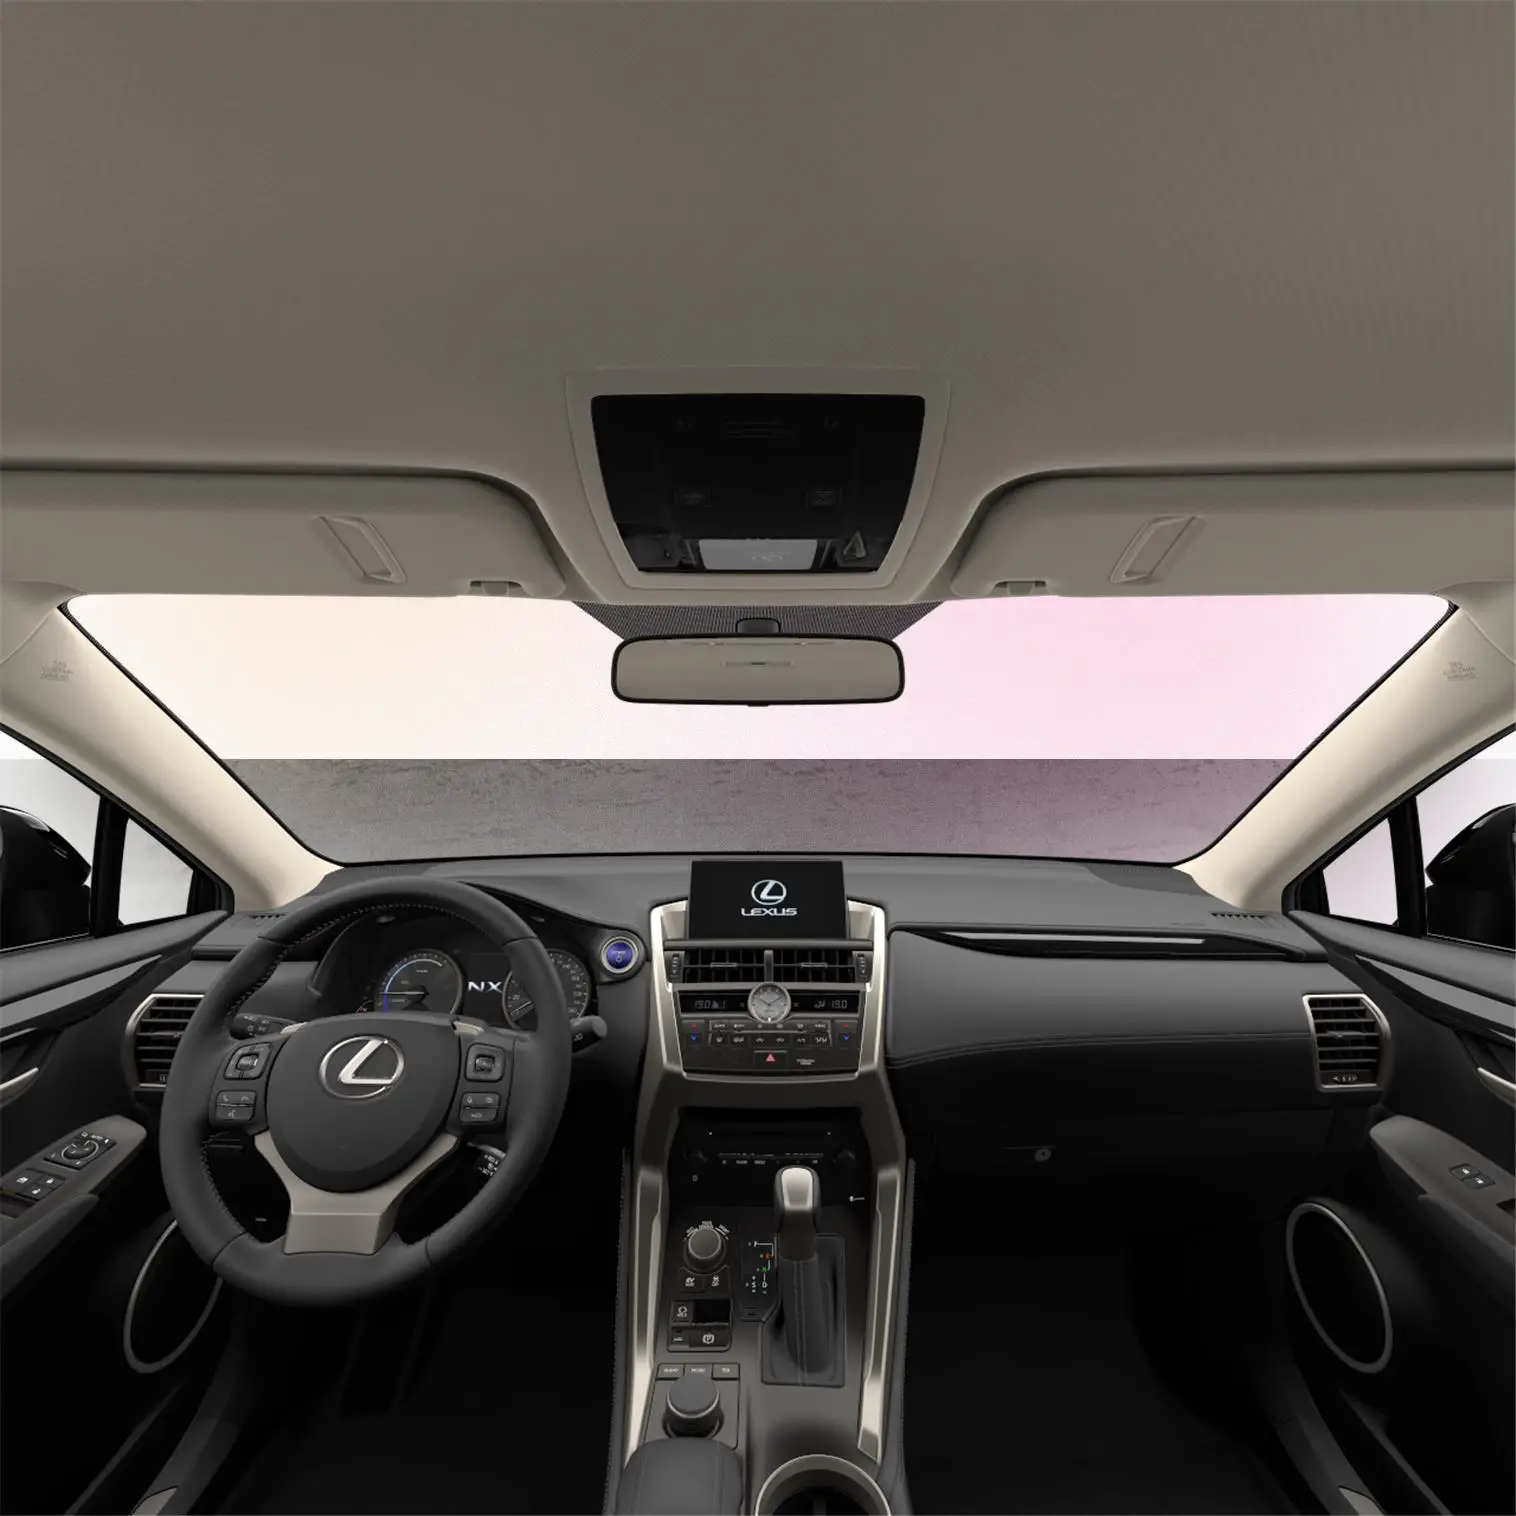 Lexus NX 300h SE interior front view